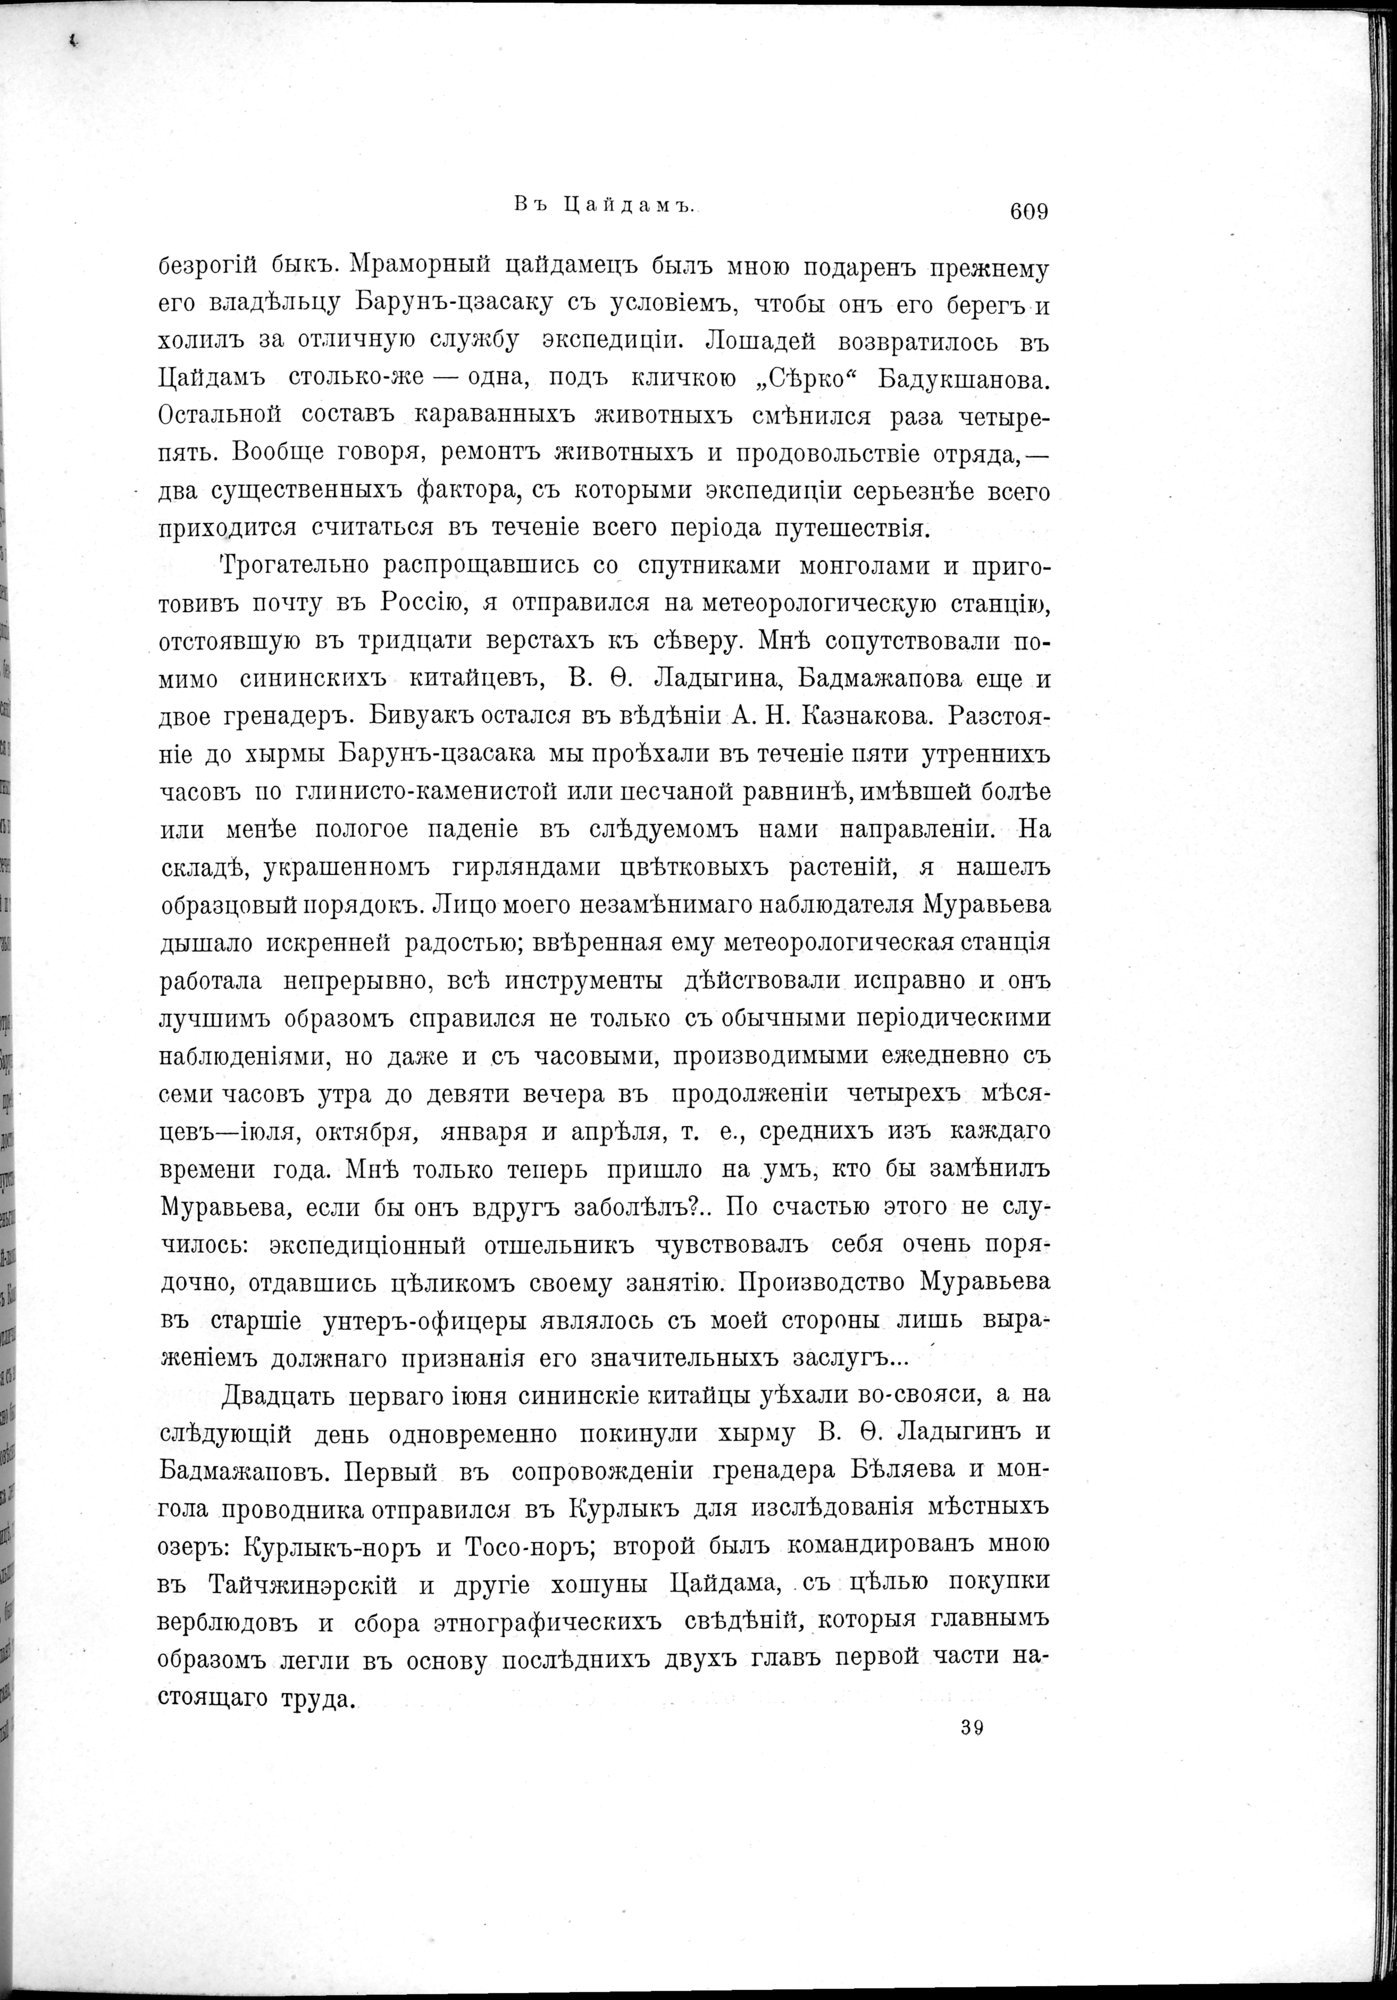 Mongoliia i Kam : vol.2 / Page 437 (Grayscale High Resolution Image)